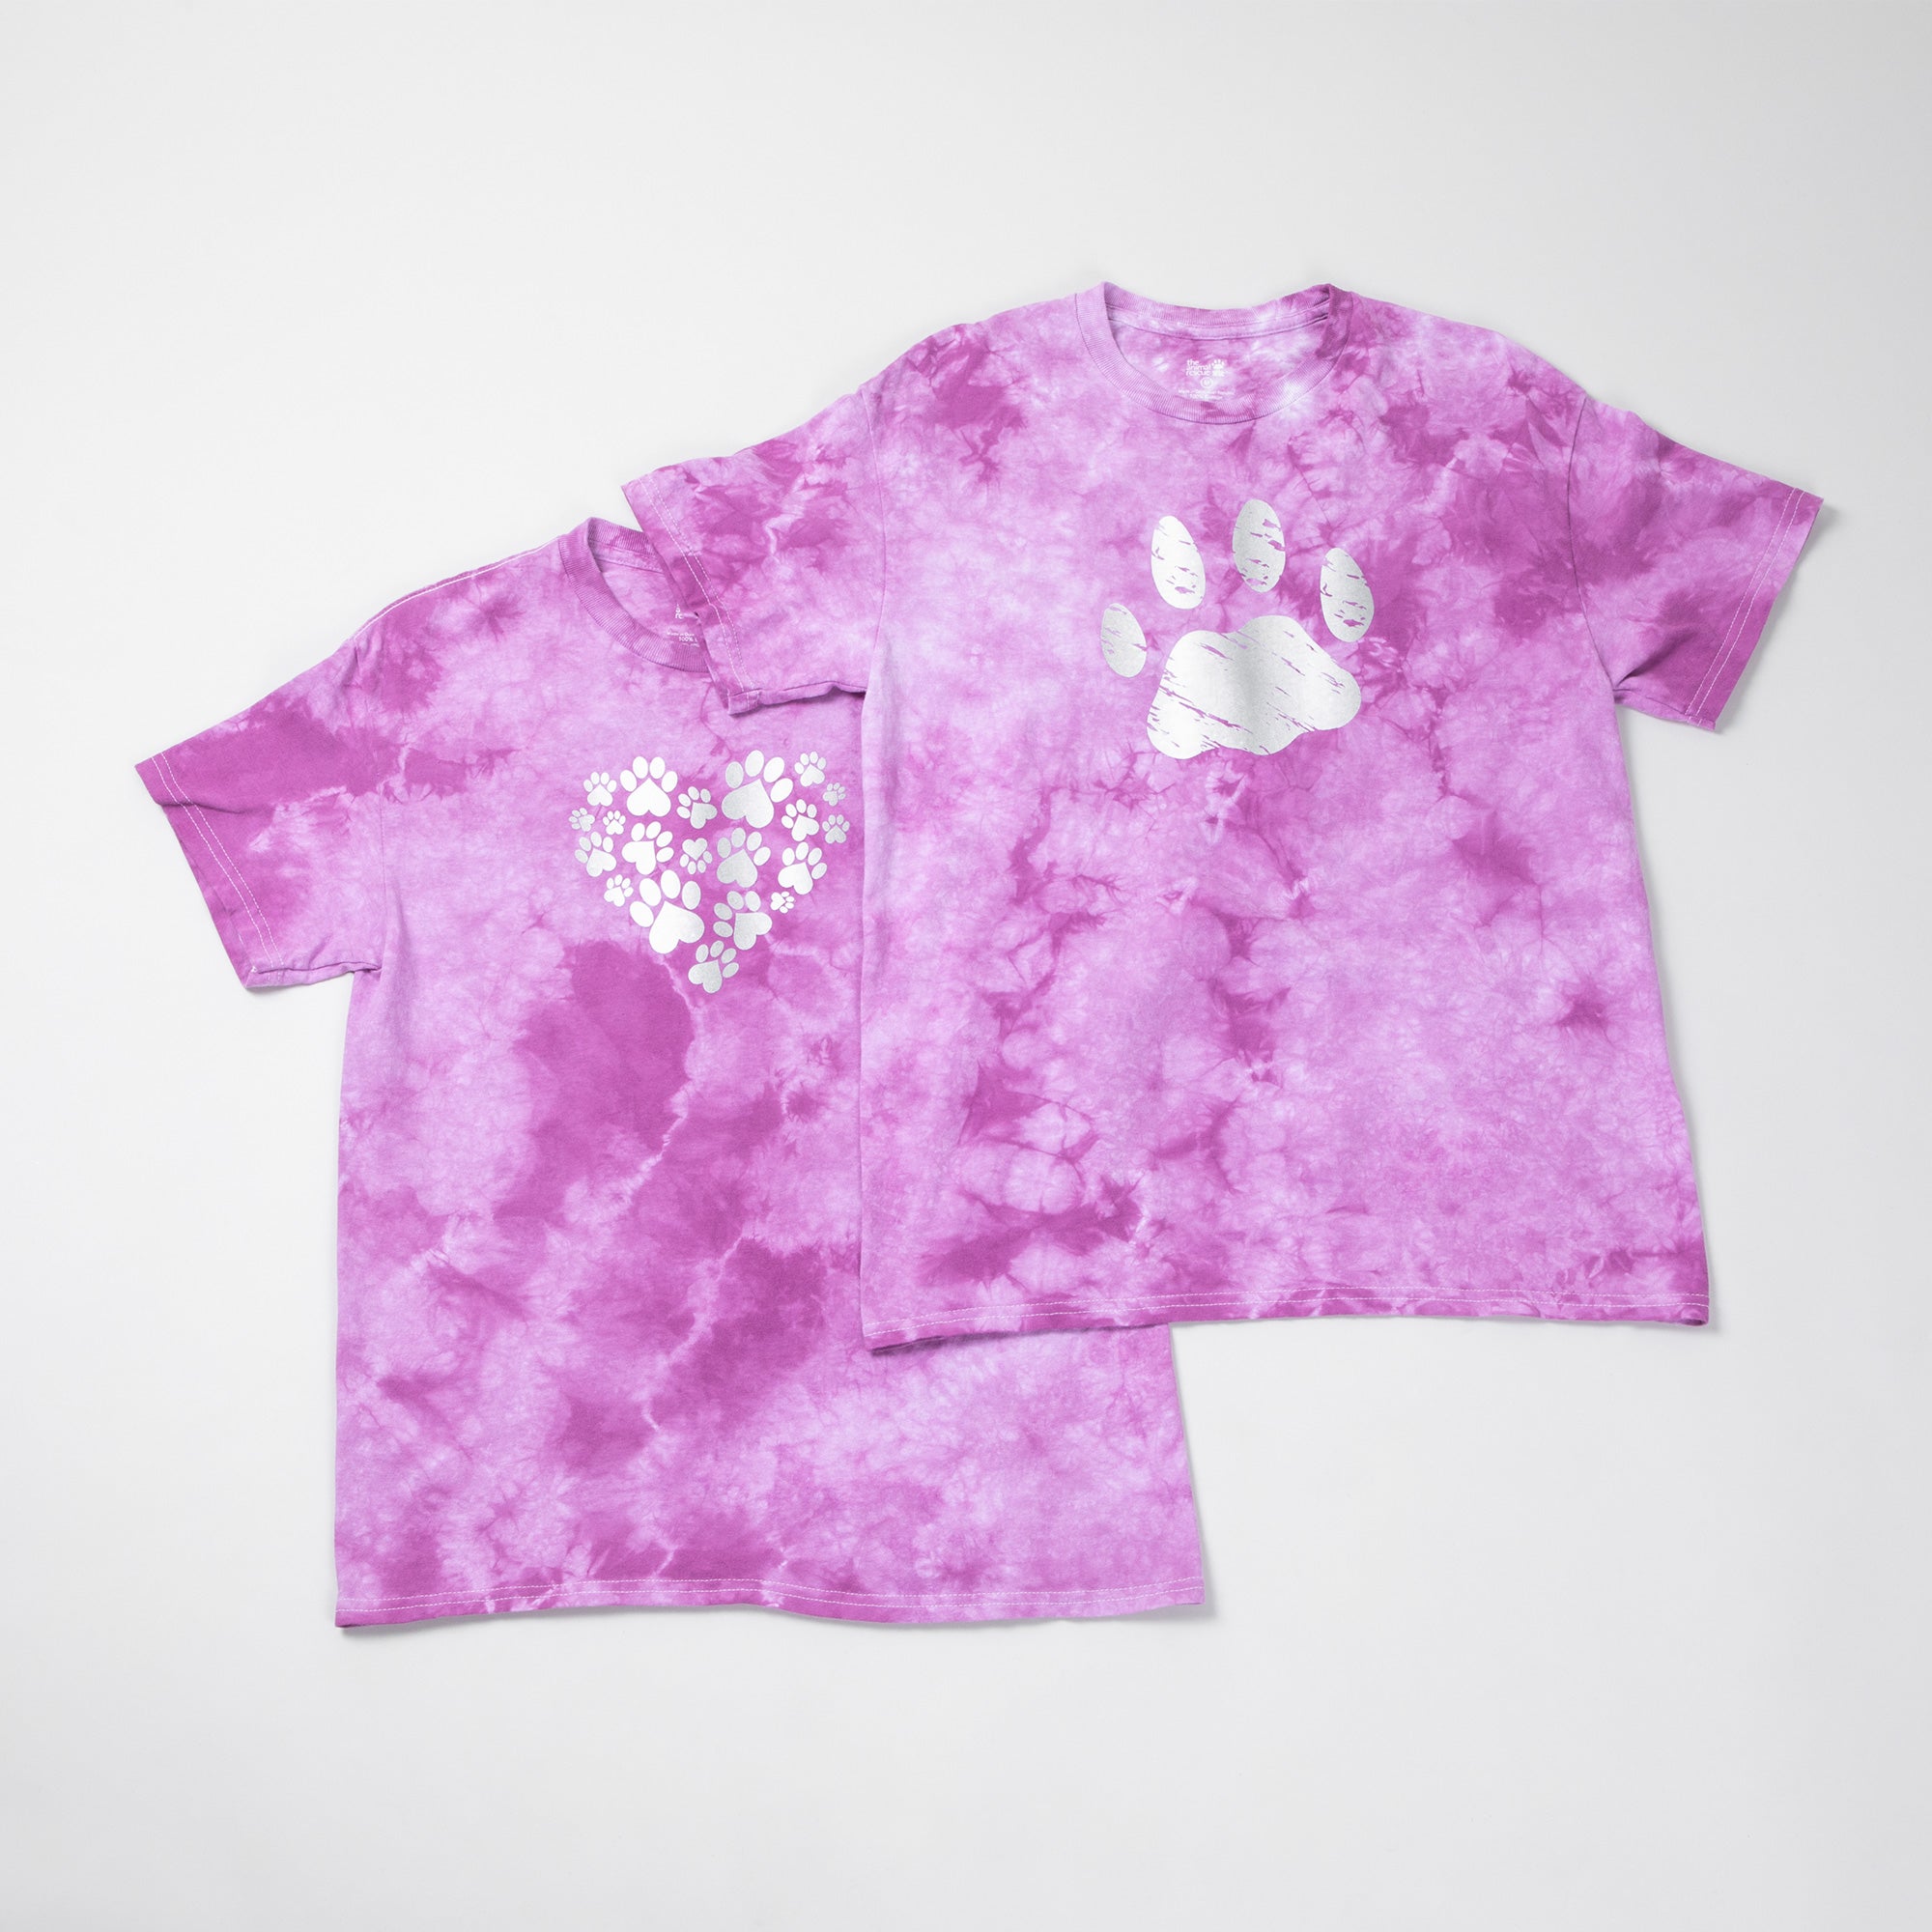 Paw Print Boysenberry Tie-Dye T-Shirt - Collegiate Paw - S